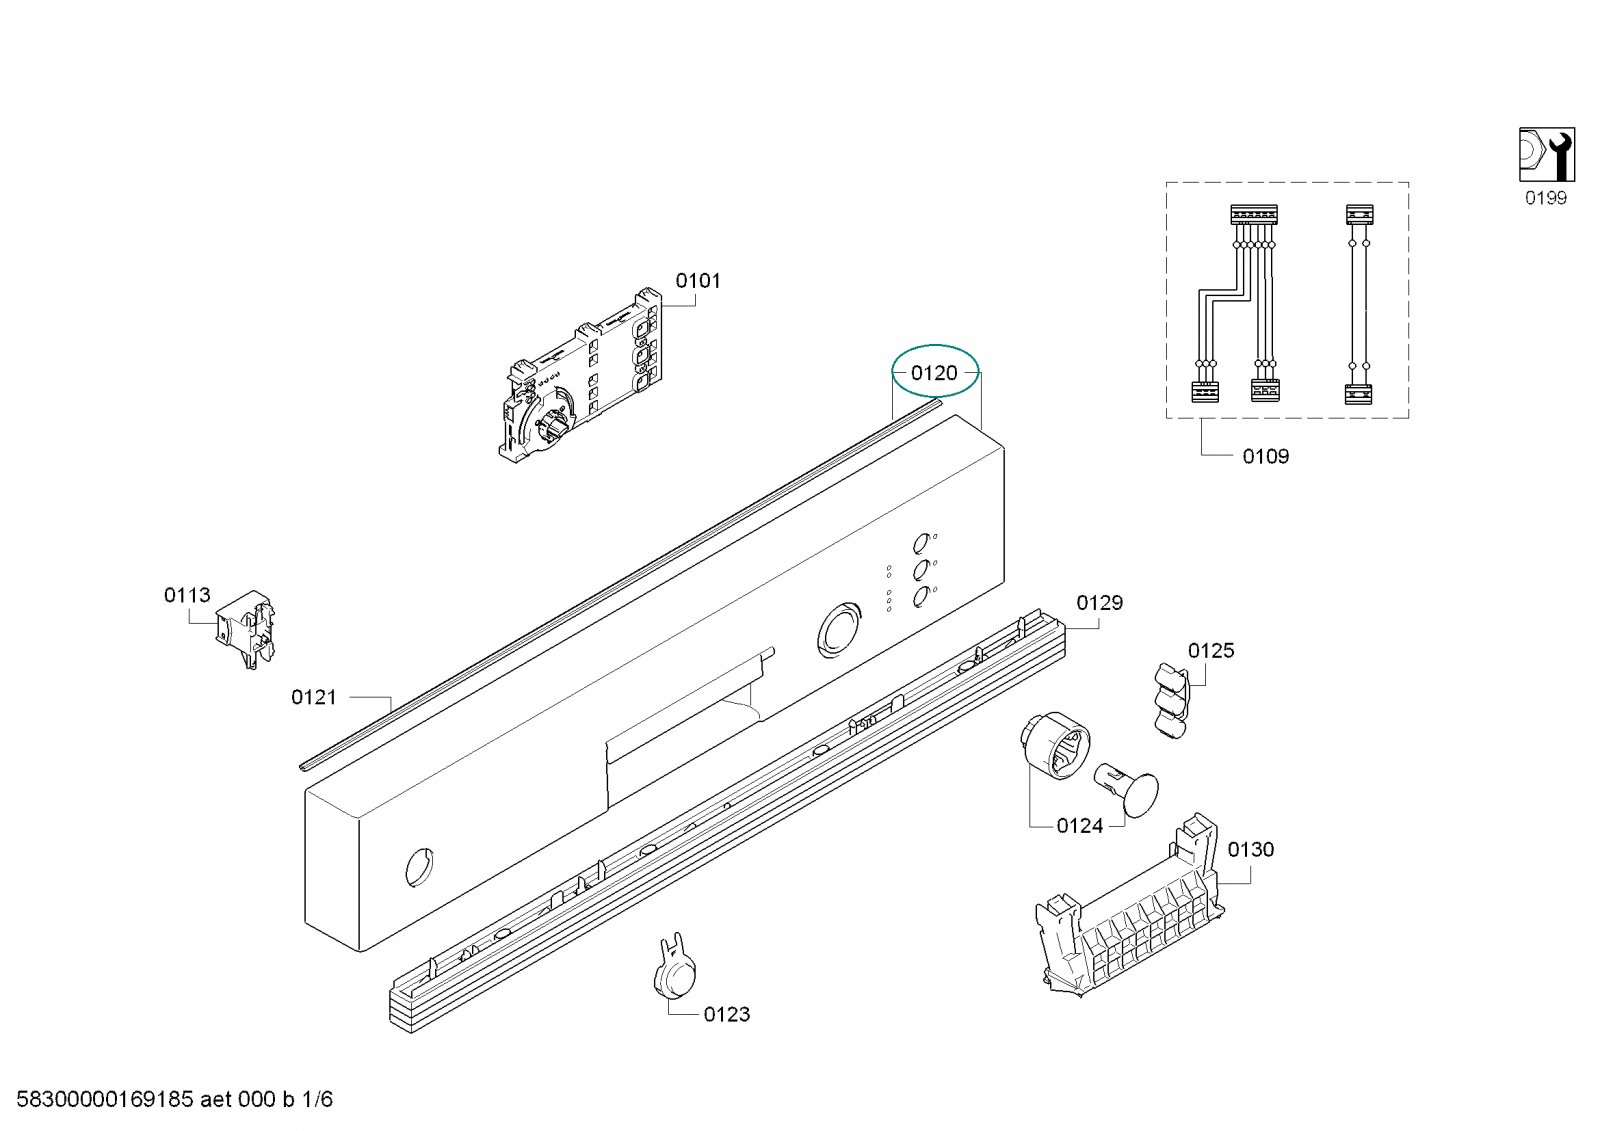 Front Control Panel for Bosch Siemens Dishwashers - Part nr. BSH 00741744 BSH - Bosch / Siemens